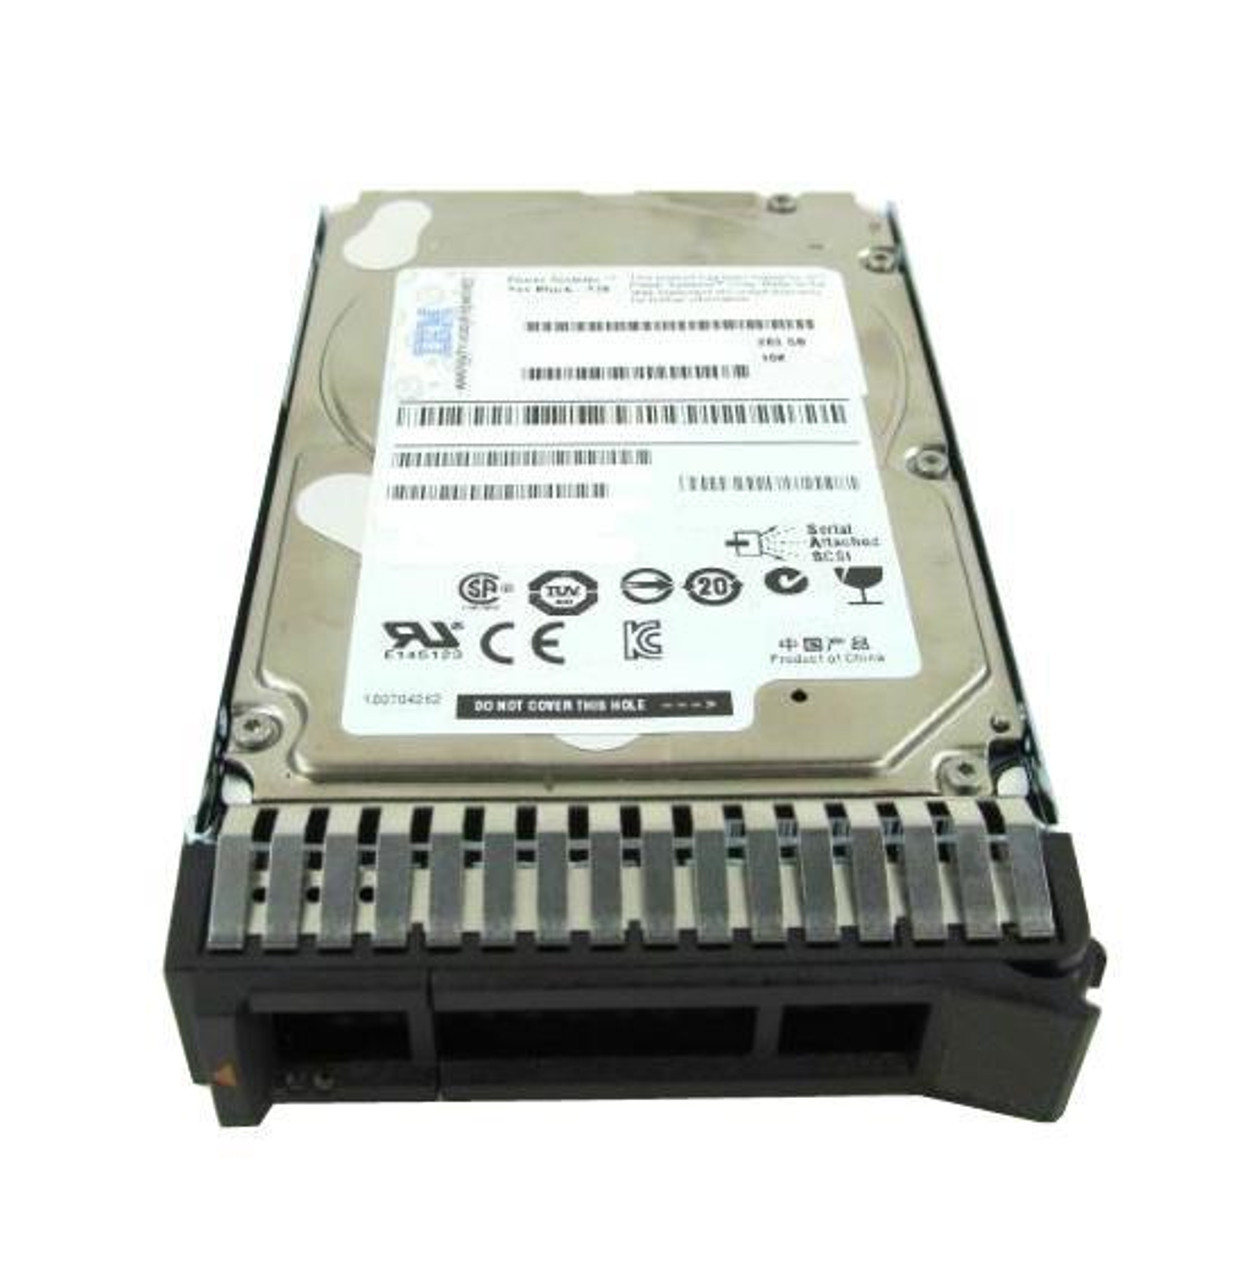 IBM 283 GB Hard Drive - 2.5" Internal - SAS -  MFR P/N 9009-ESDA-RMK